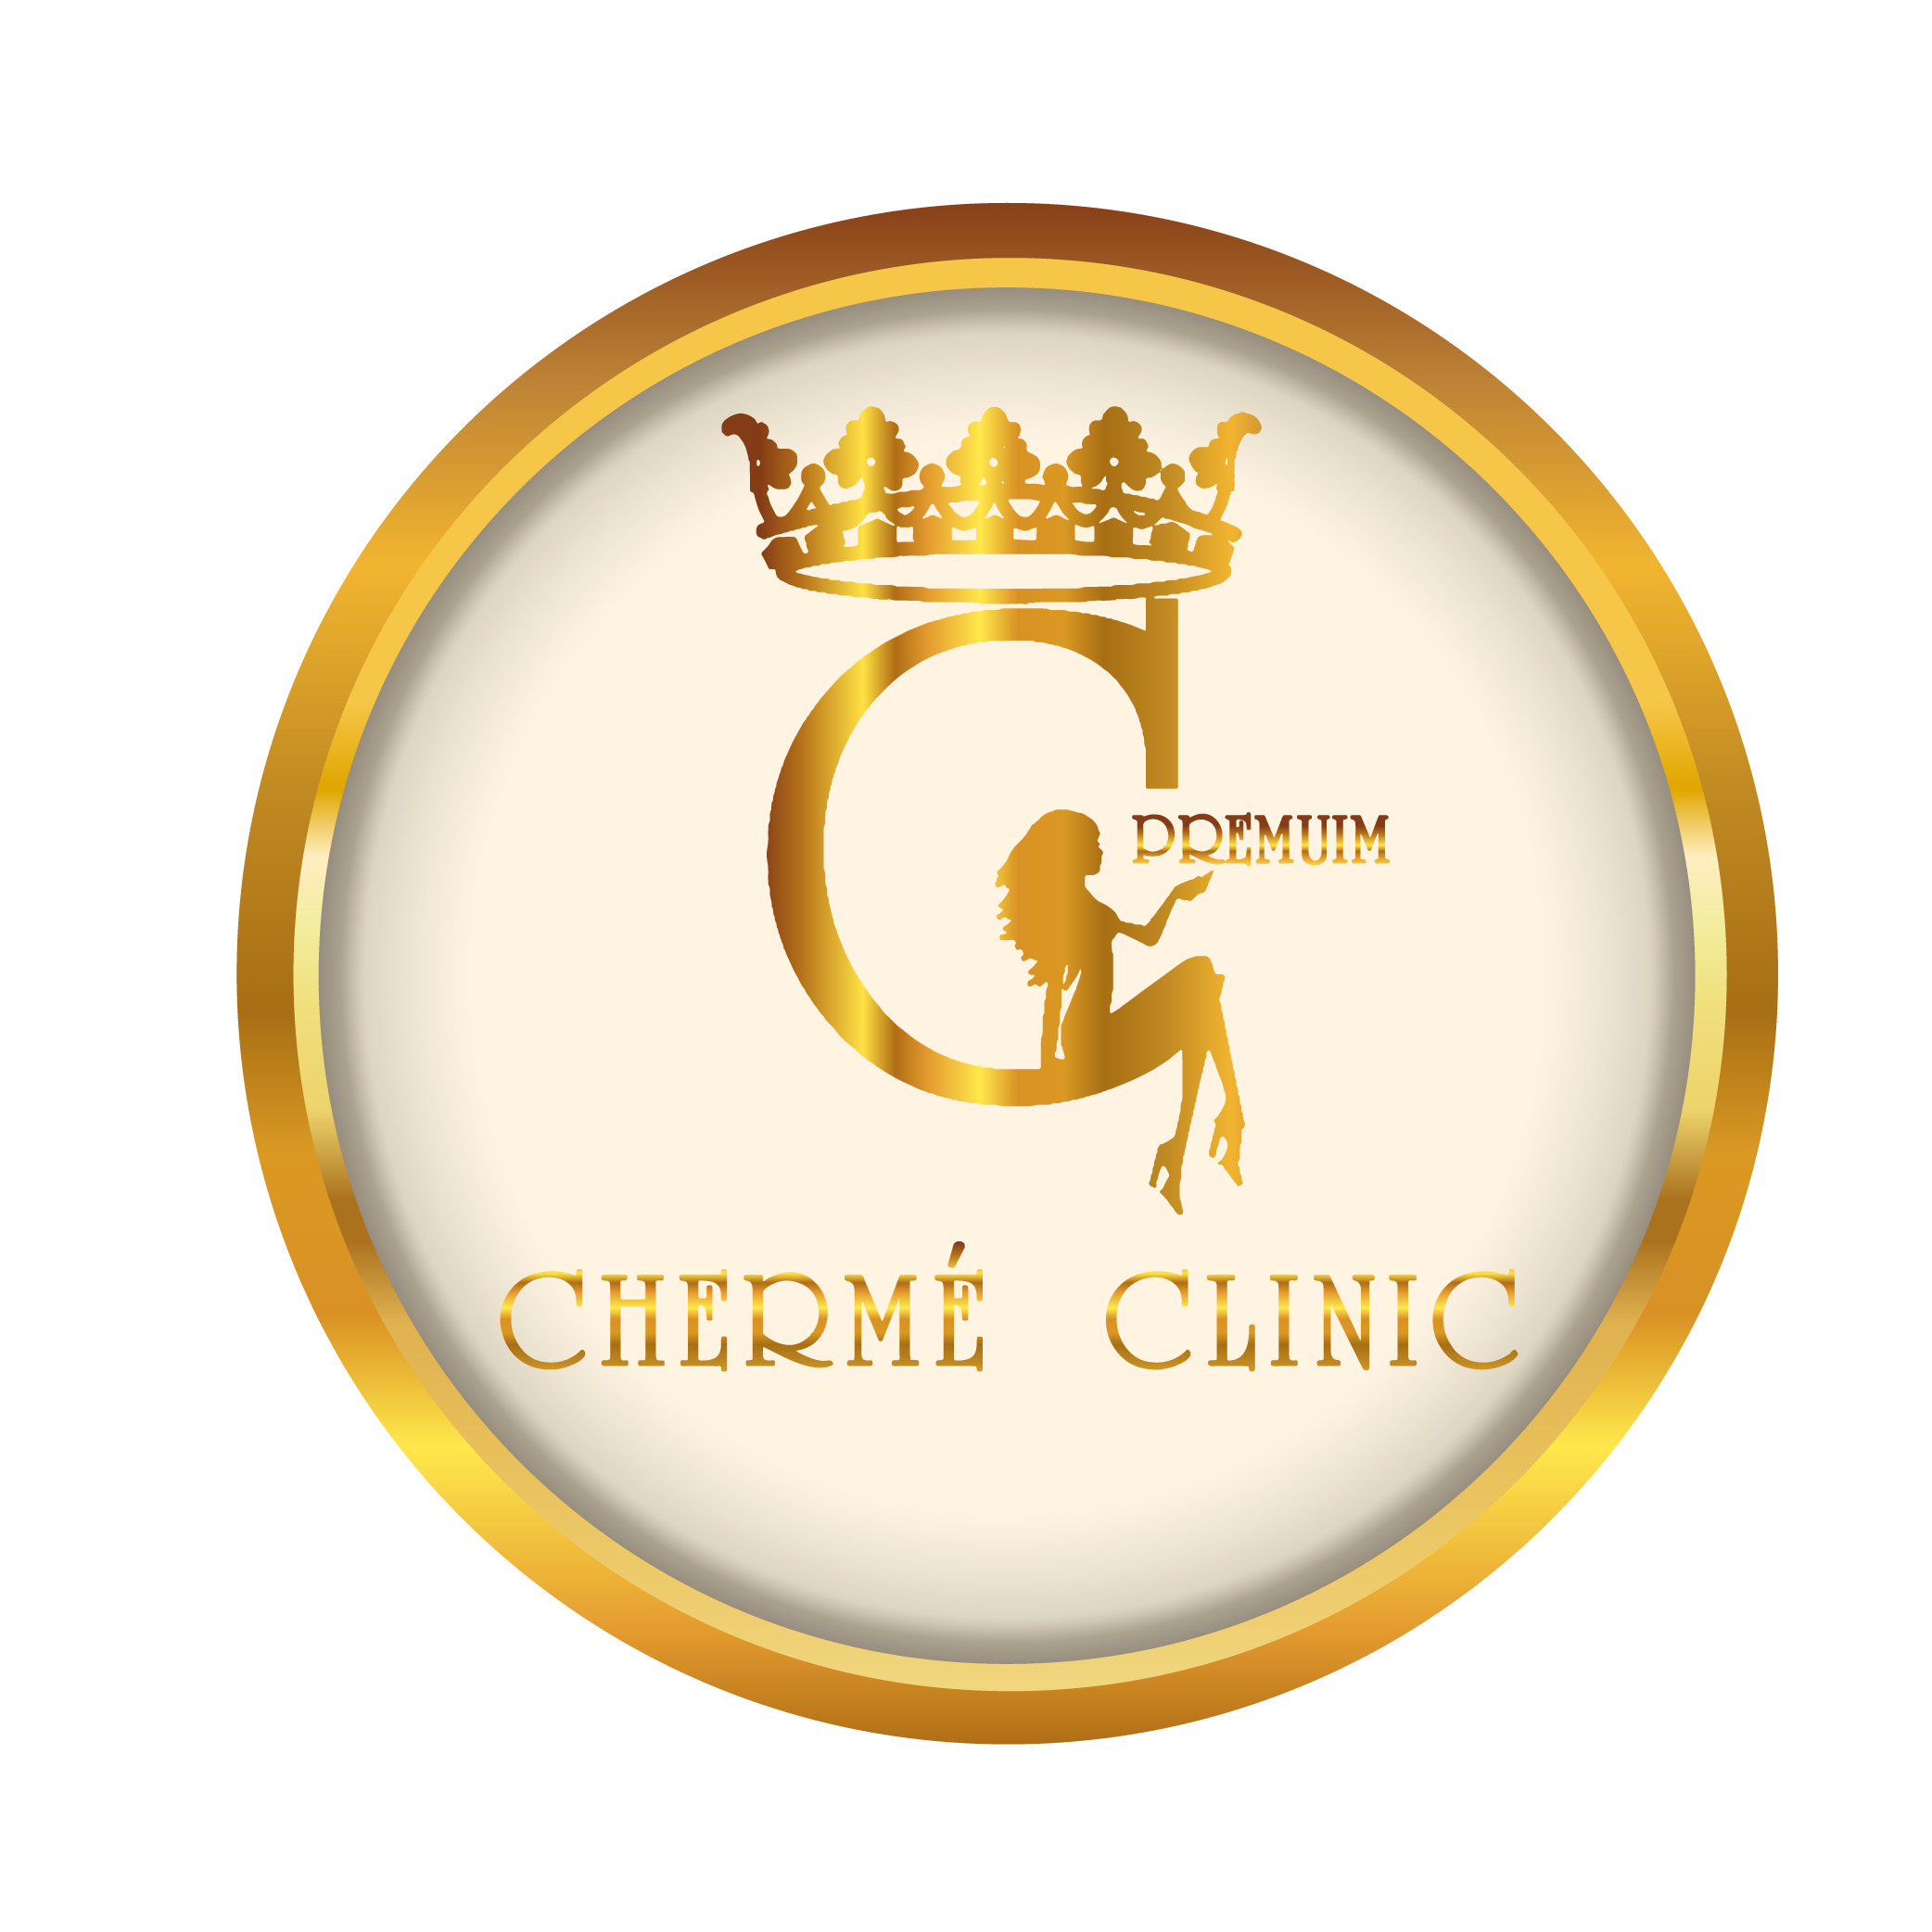 Chermeclinic 